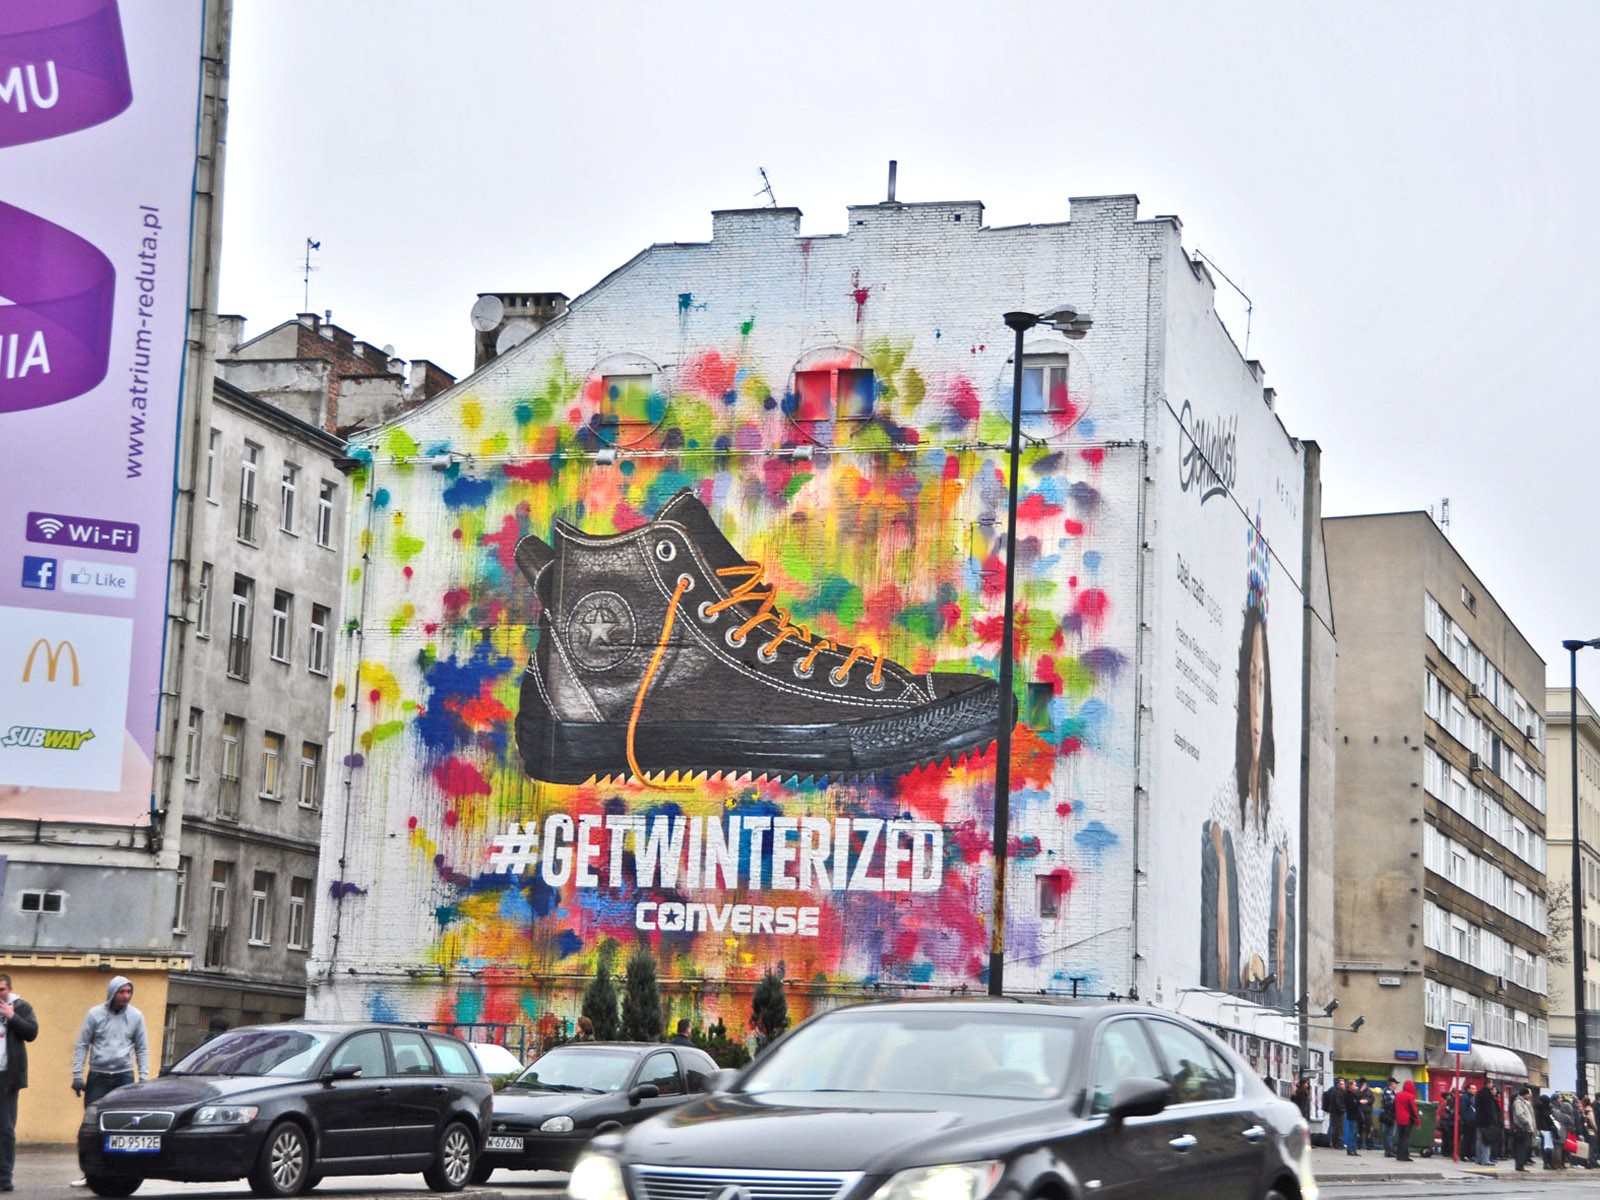 Werbefassade Converse getwinterized - Warschau Polna 40 | #getwinterized | Portfolio